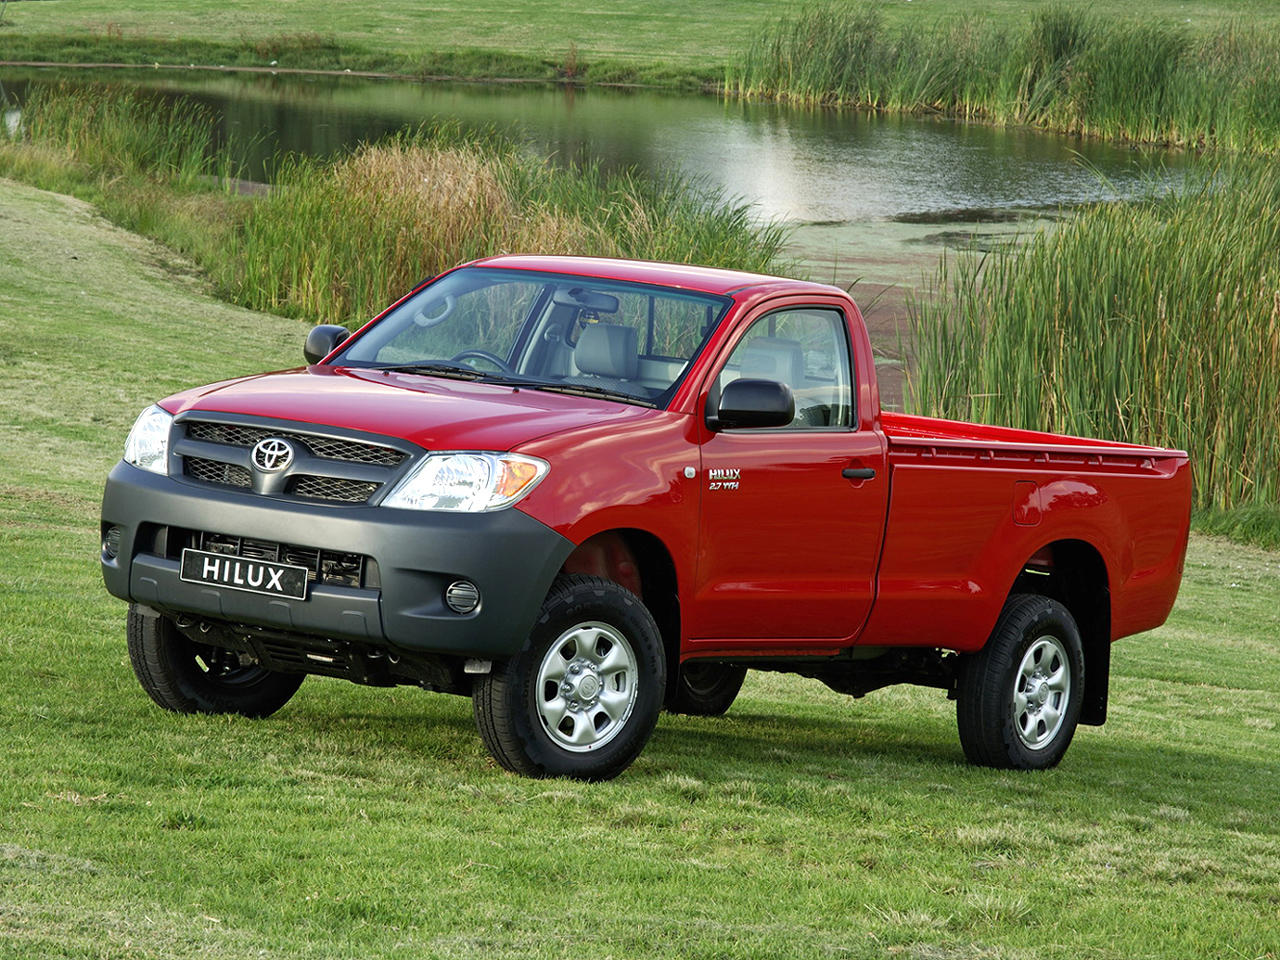 Авто бу пикапы. Toyota Hilux Pickup 2005. Toyota Hilux Regular Cab. Тойота Хайлюкс 3 поколения. Тойота Хайлюкс 2005 Single Cab.